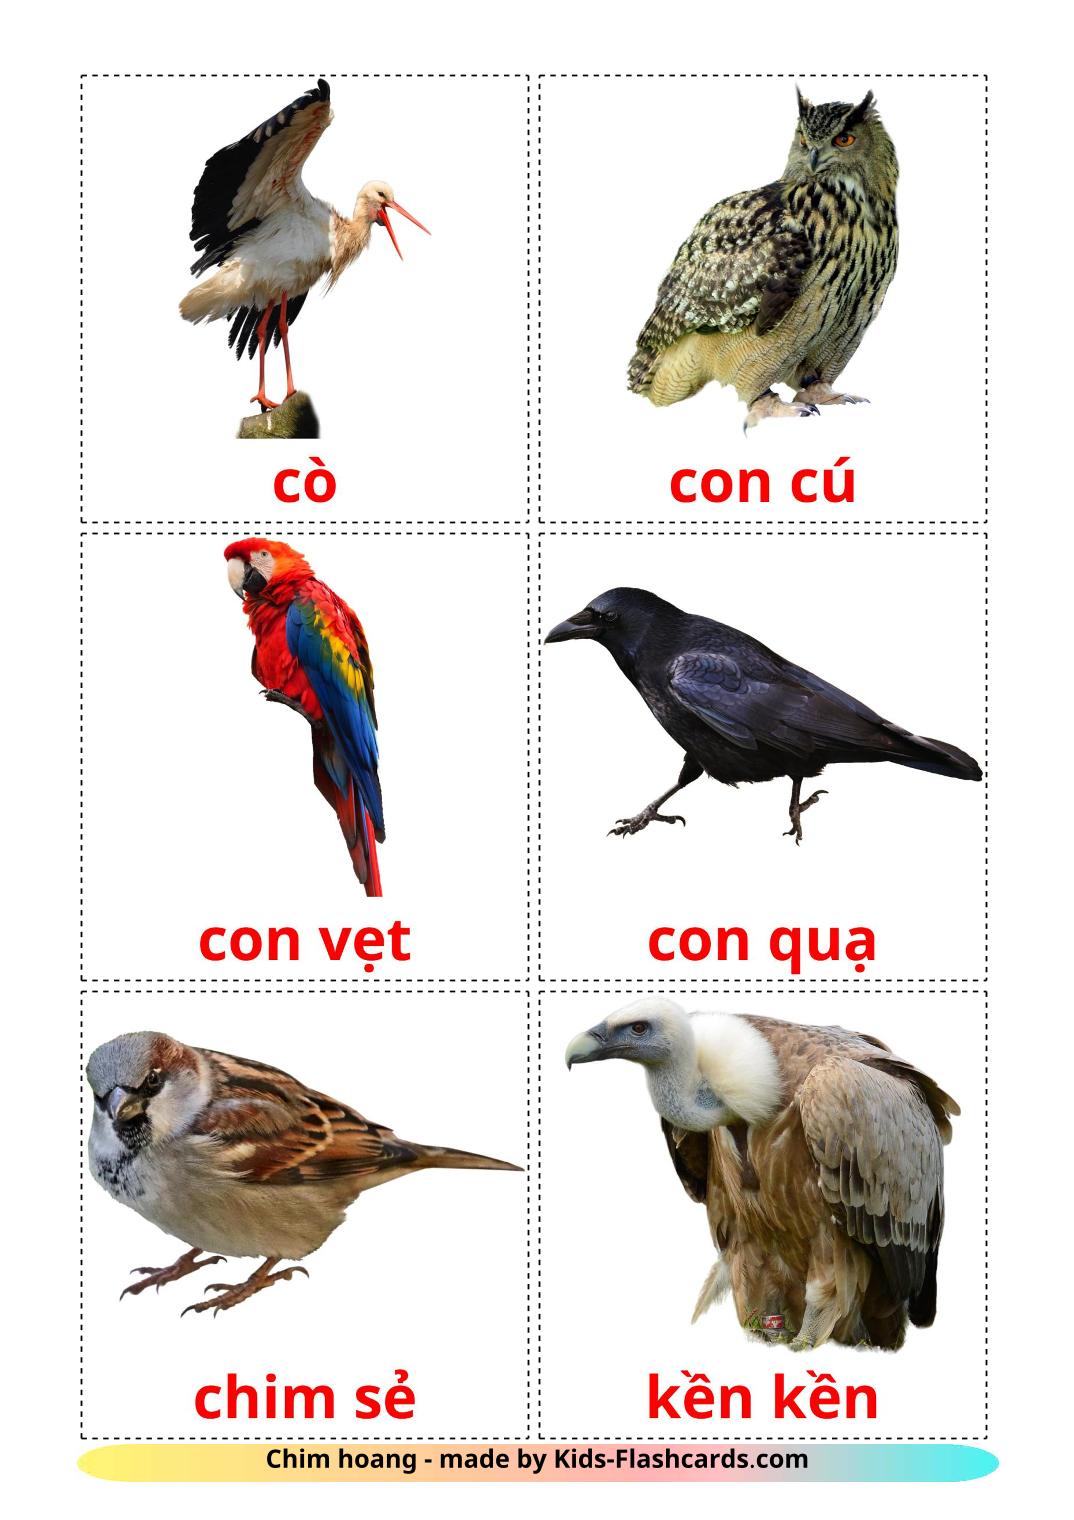 Uccelli selvaggi - 18 flashcards vietnamita stampabili gratuitamente